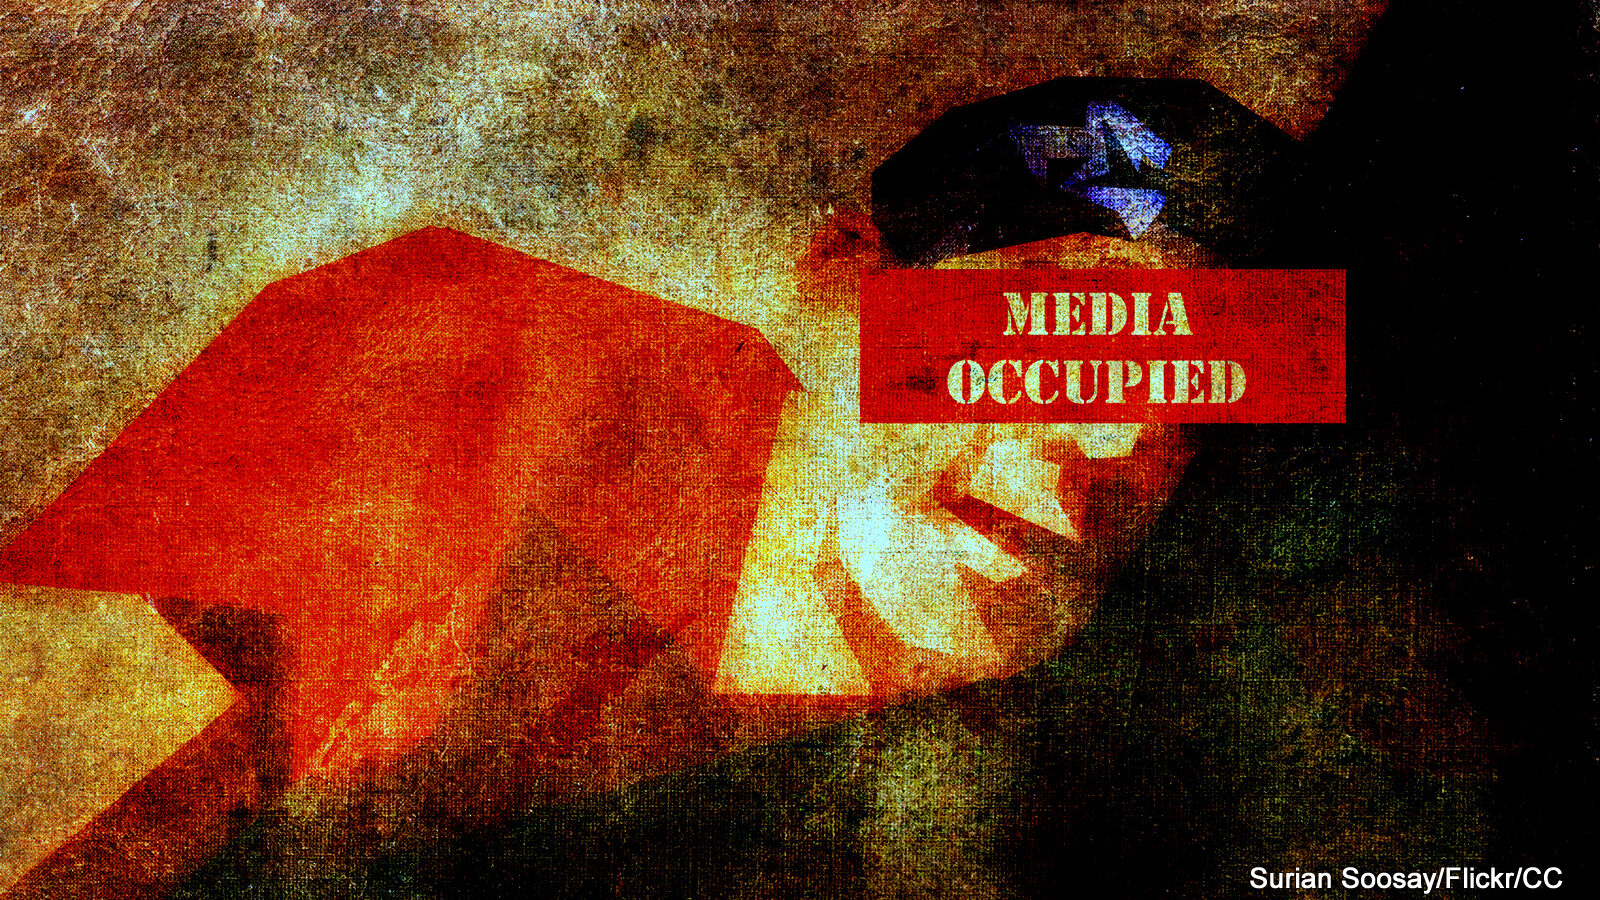 Mainstream media occpied